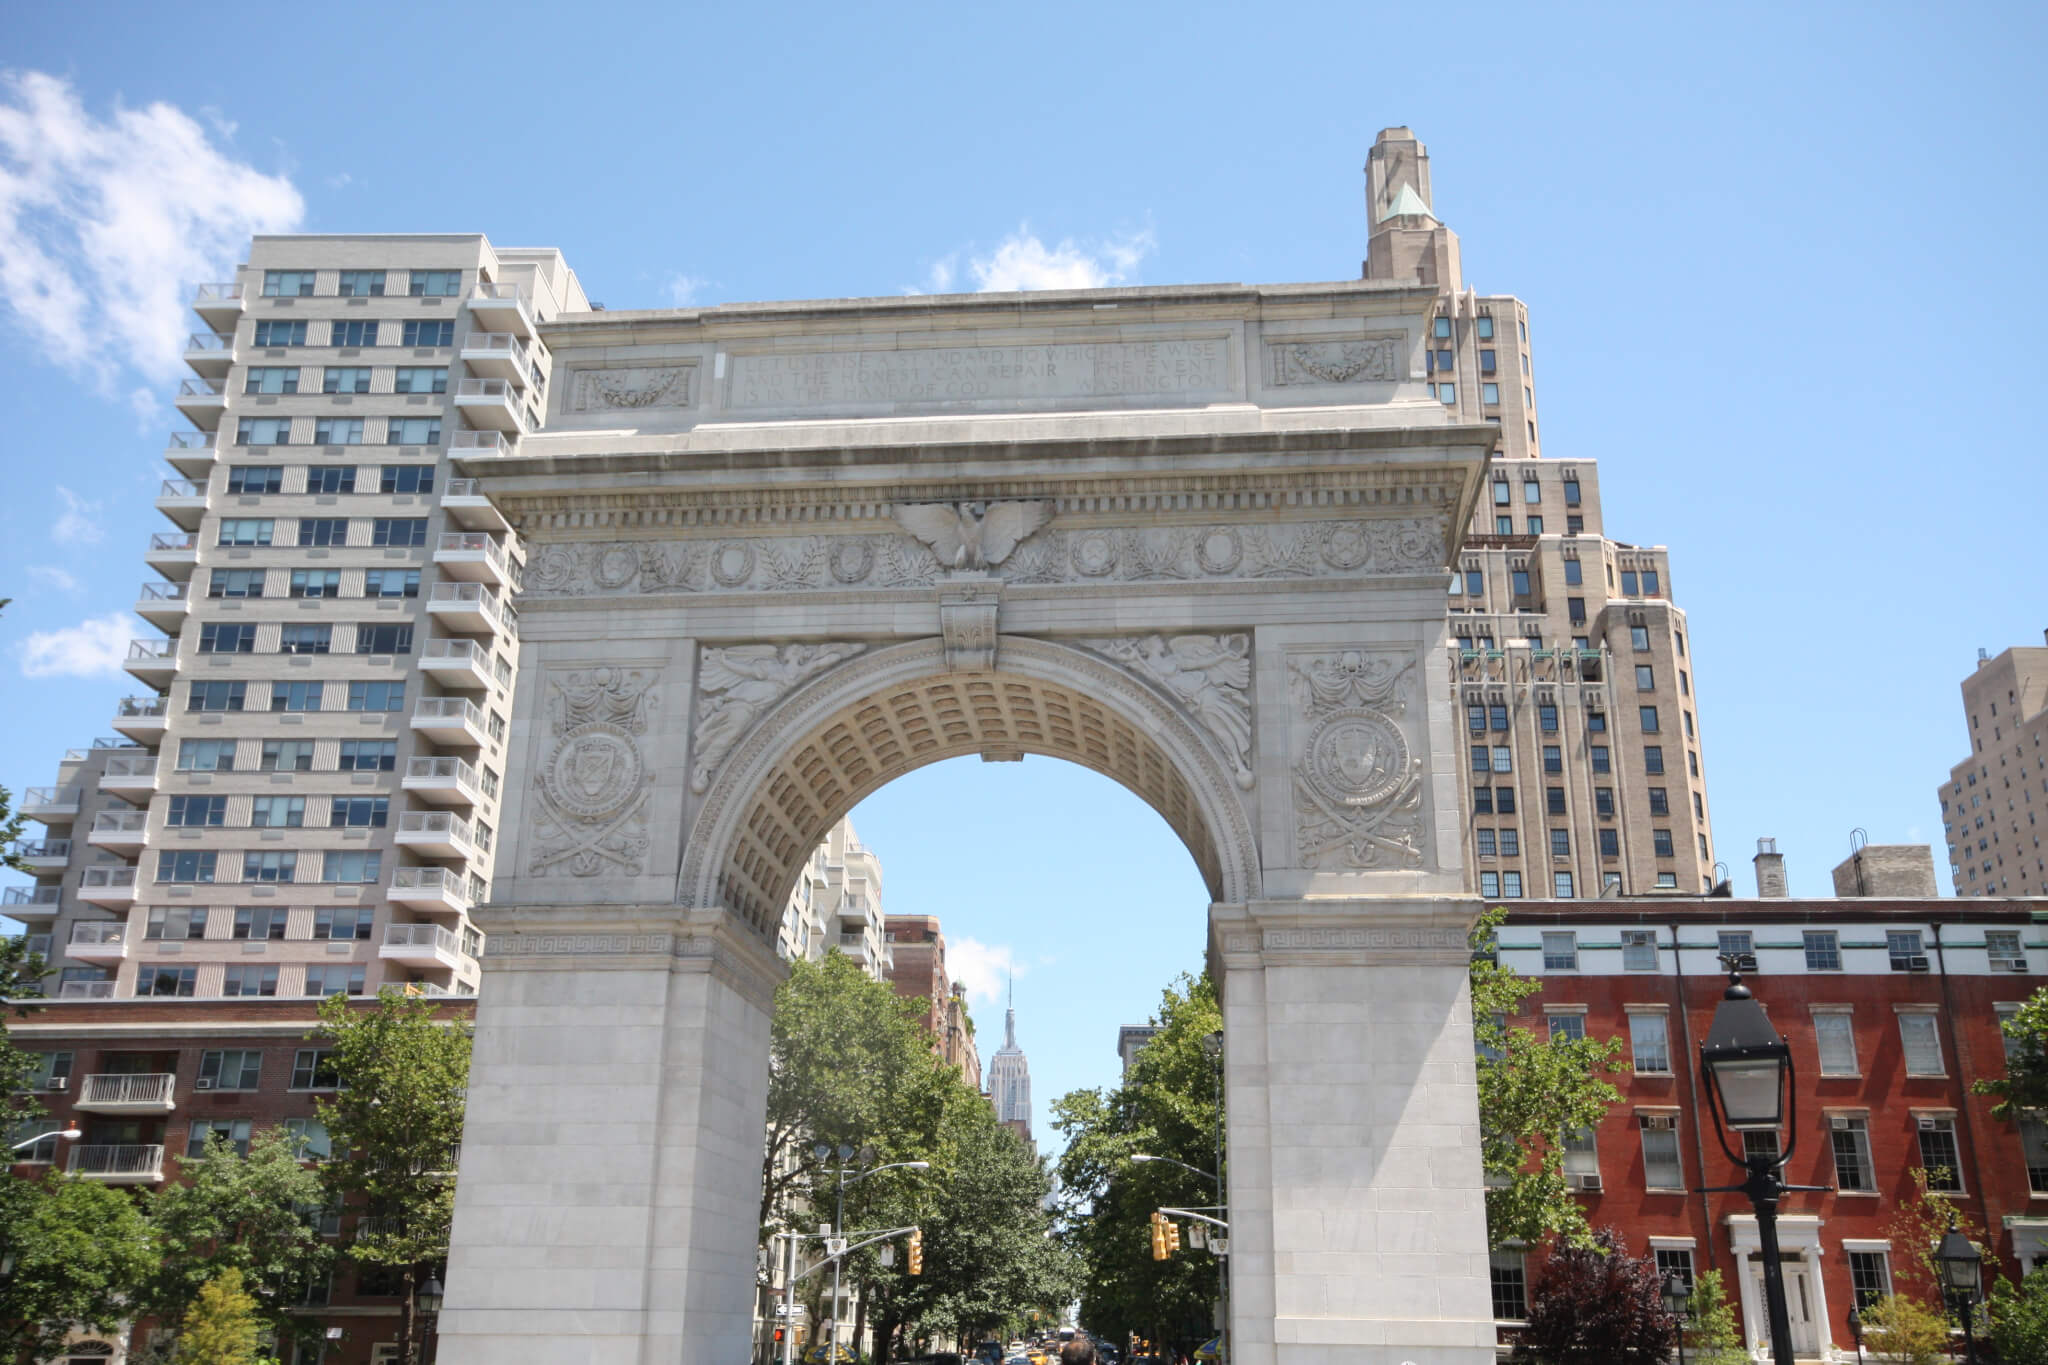 Washington arch, New York